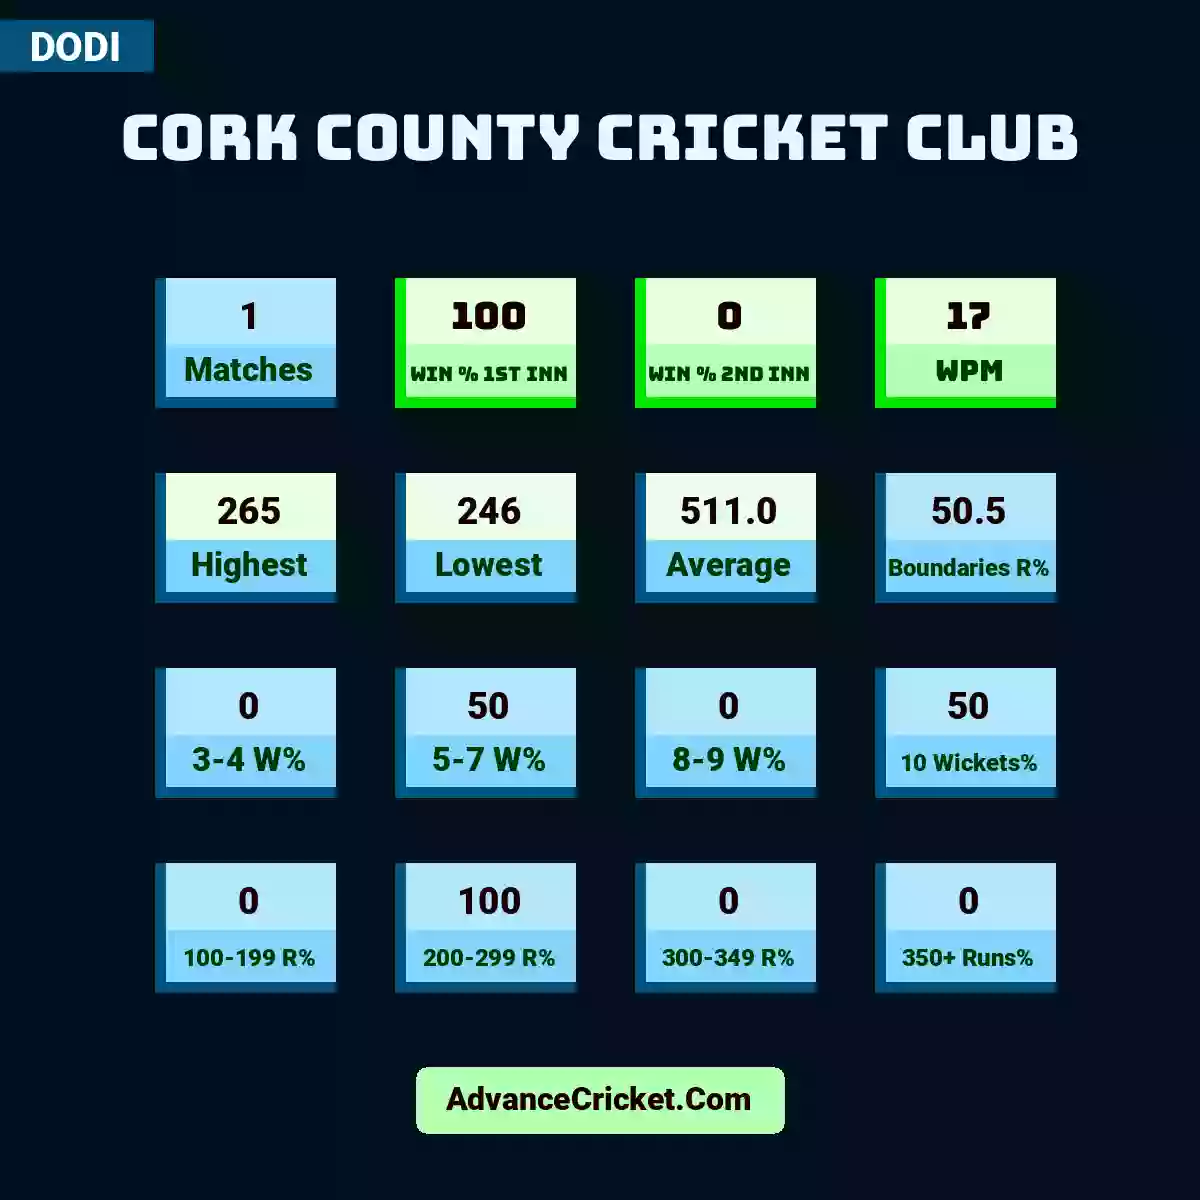 Image showing Cork County Cricket Club with Matches: 1, Win % 1st Inn: 100, Win % 2nd Inn: 0, WPM: 17, Highest: 265, Lowest: 246, Average: 511.0, Boundaries R%: 50.5, 3-4 W%: 0, 5-7 W%: 50, 8-9 W%: 0, 10 Wickets%: 50, 100-199 R%: 0, 200-299 R%: 100, 300-349 R%: 0, 350+ Runs%: 0.